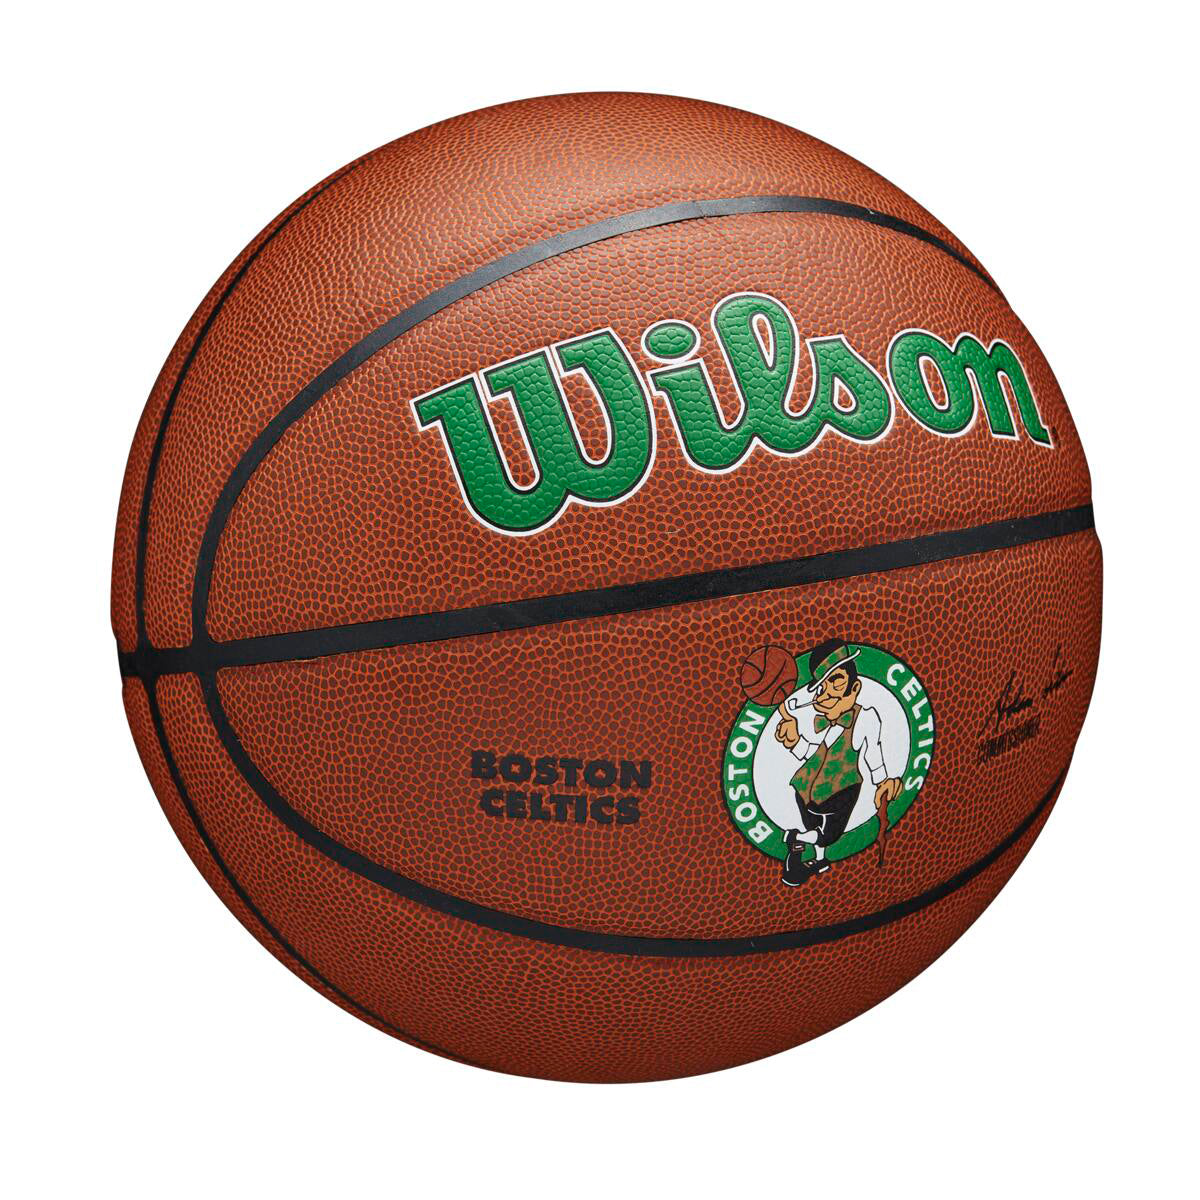 Wilson NBA Composite Boston Celtics 7